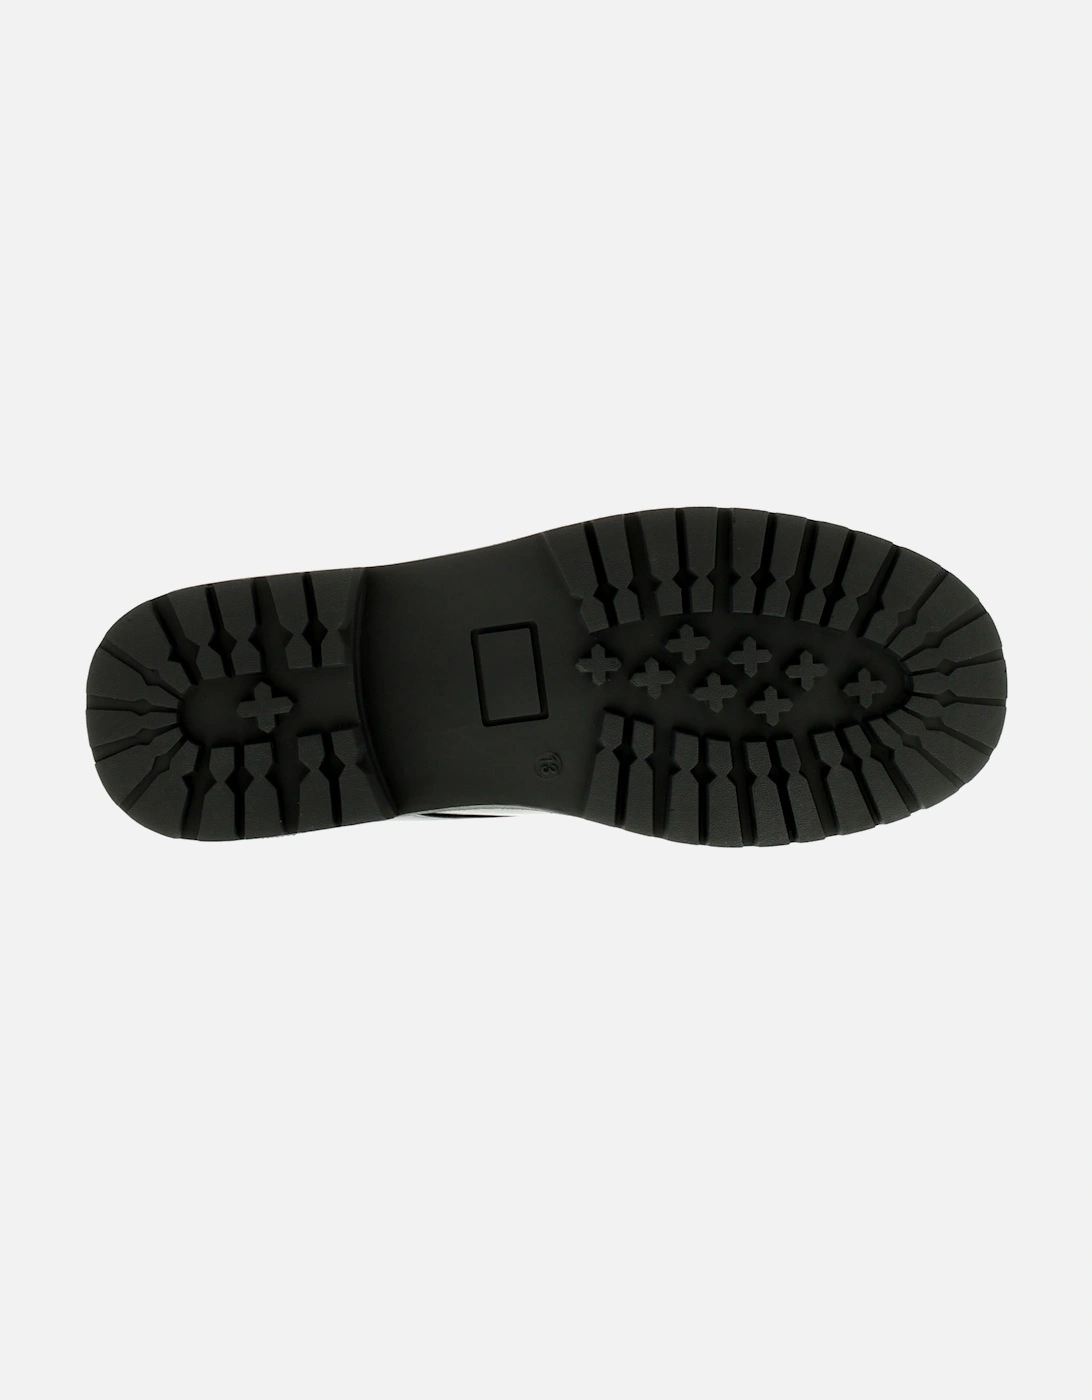 Mens Smart Shoes Viking V XL Touch Fastening black UK Size